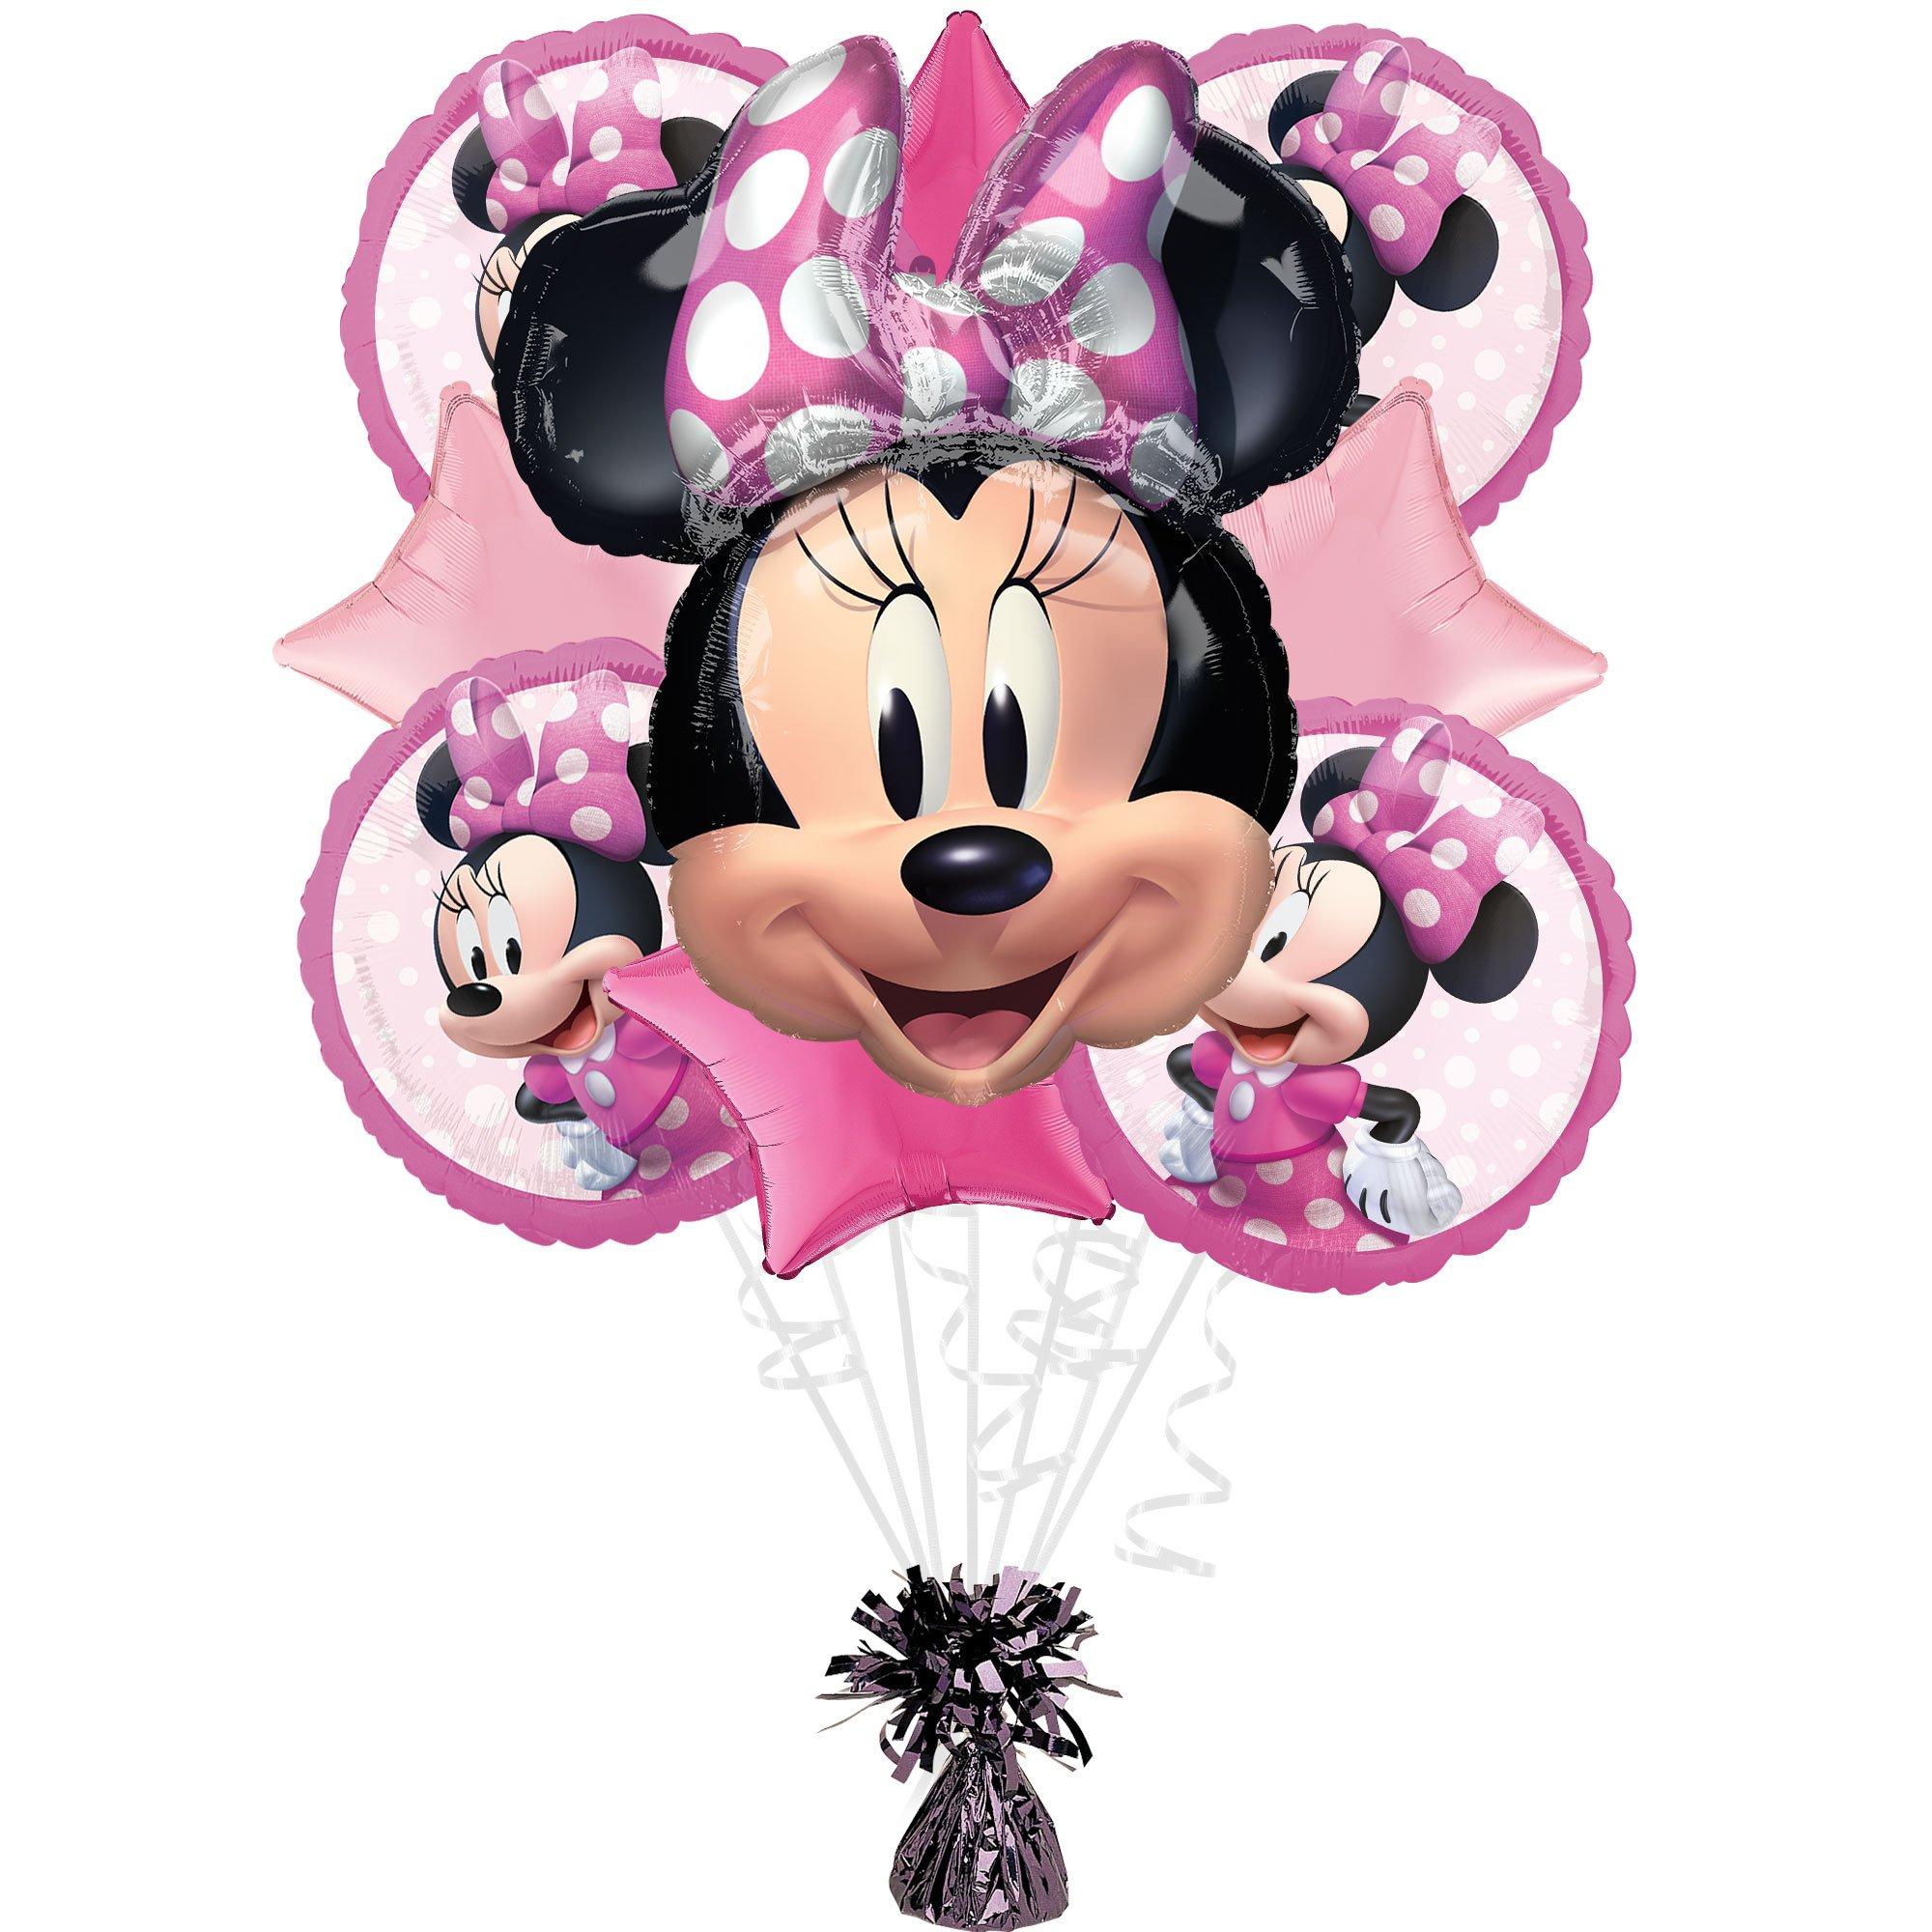 Minnie Mouse Forever Foil Balloon Bouquet